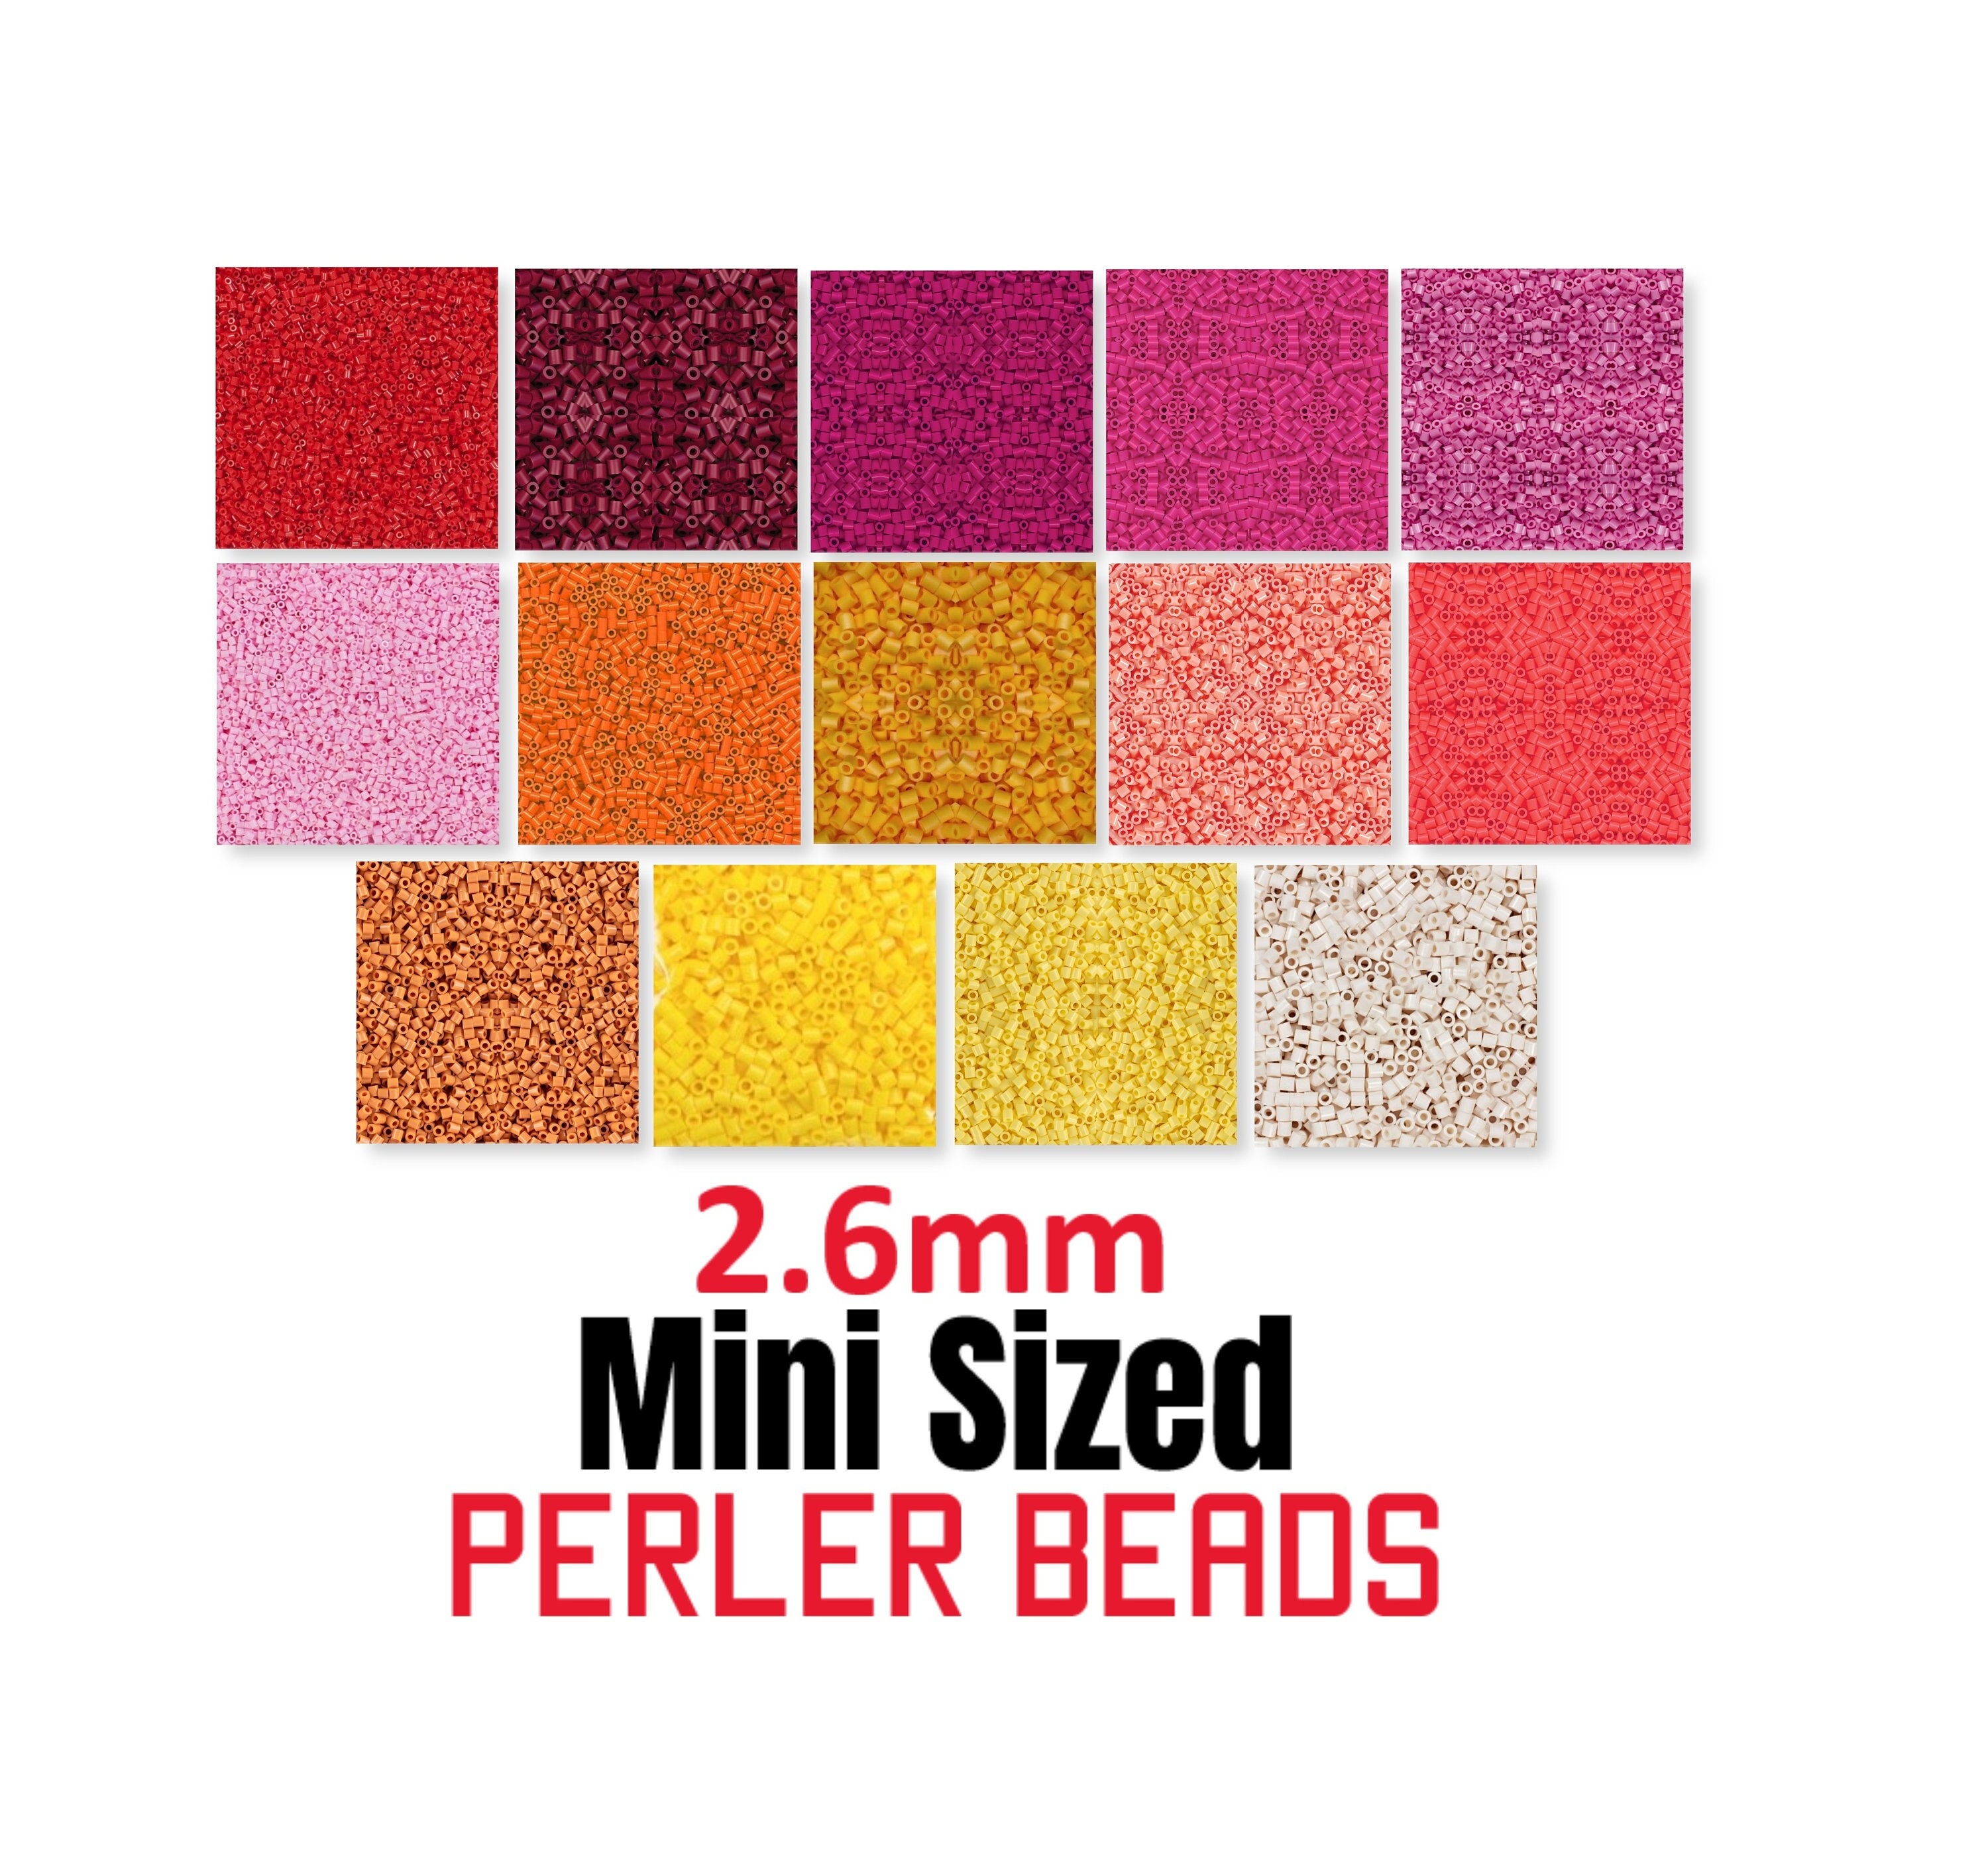 Perler Beads Rainbow Pony Fused Bead Kit Beads for Girls, 2000 pcs